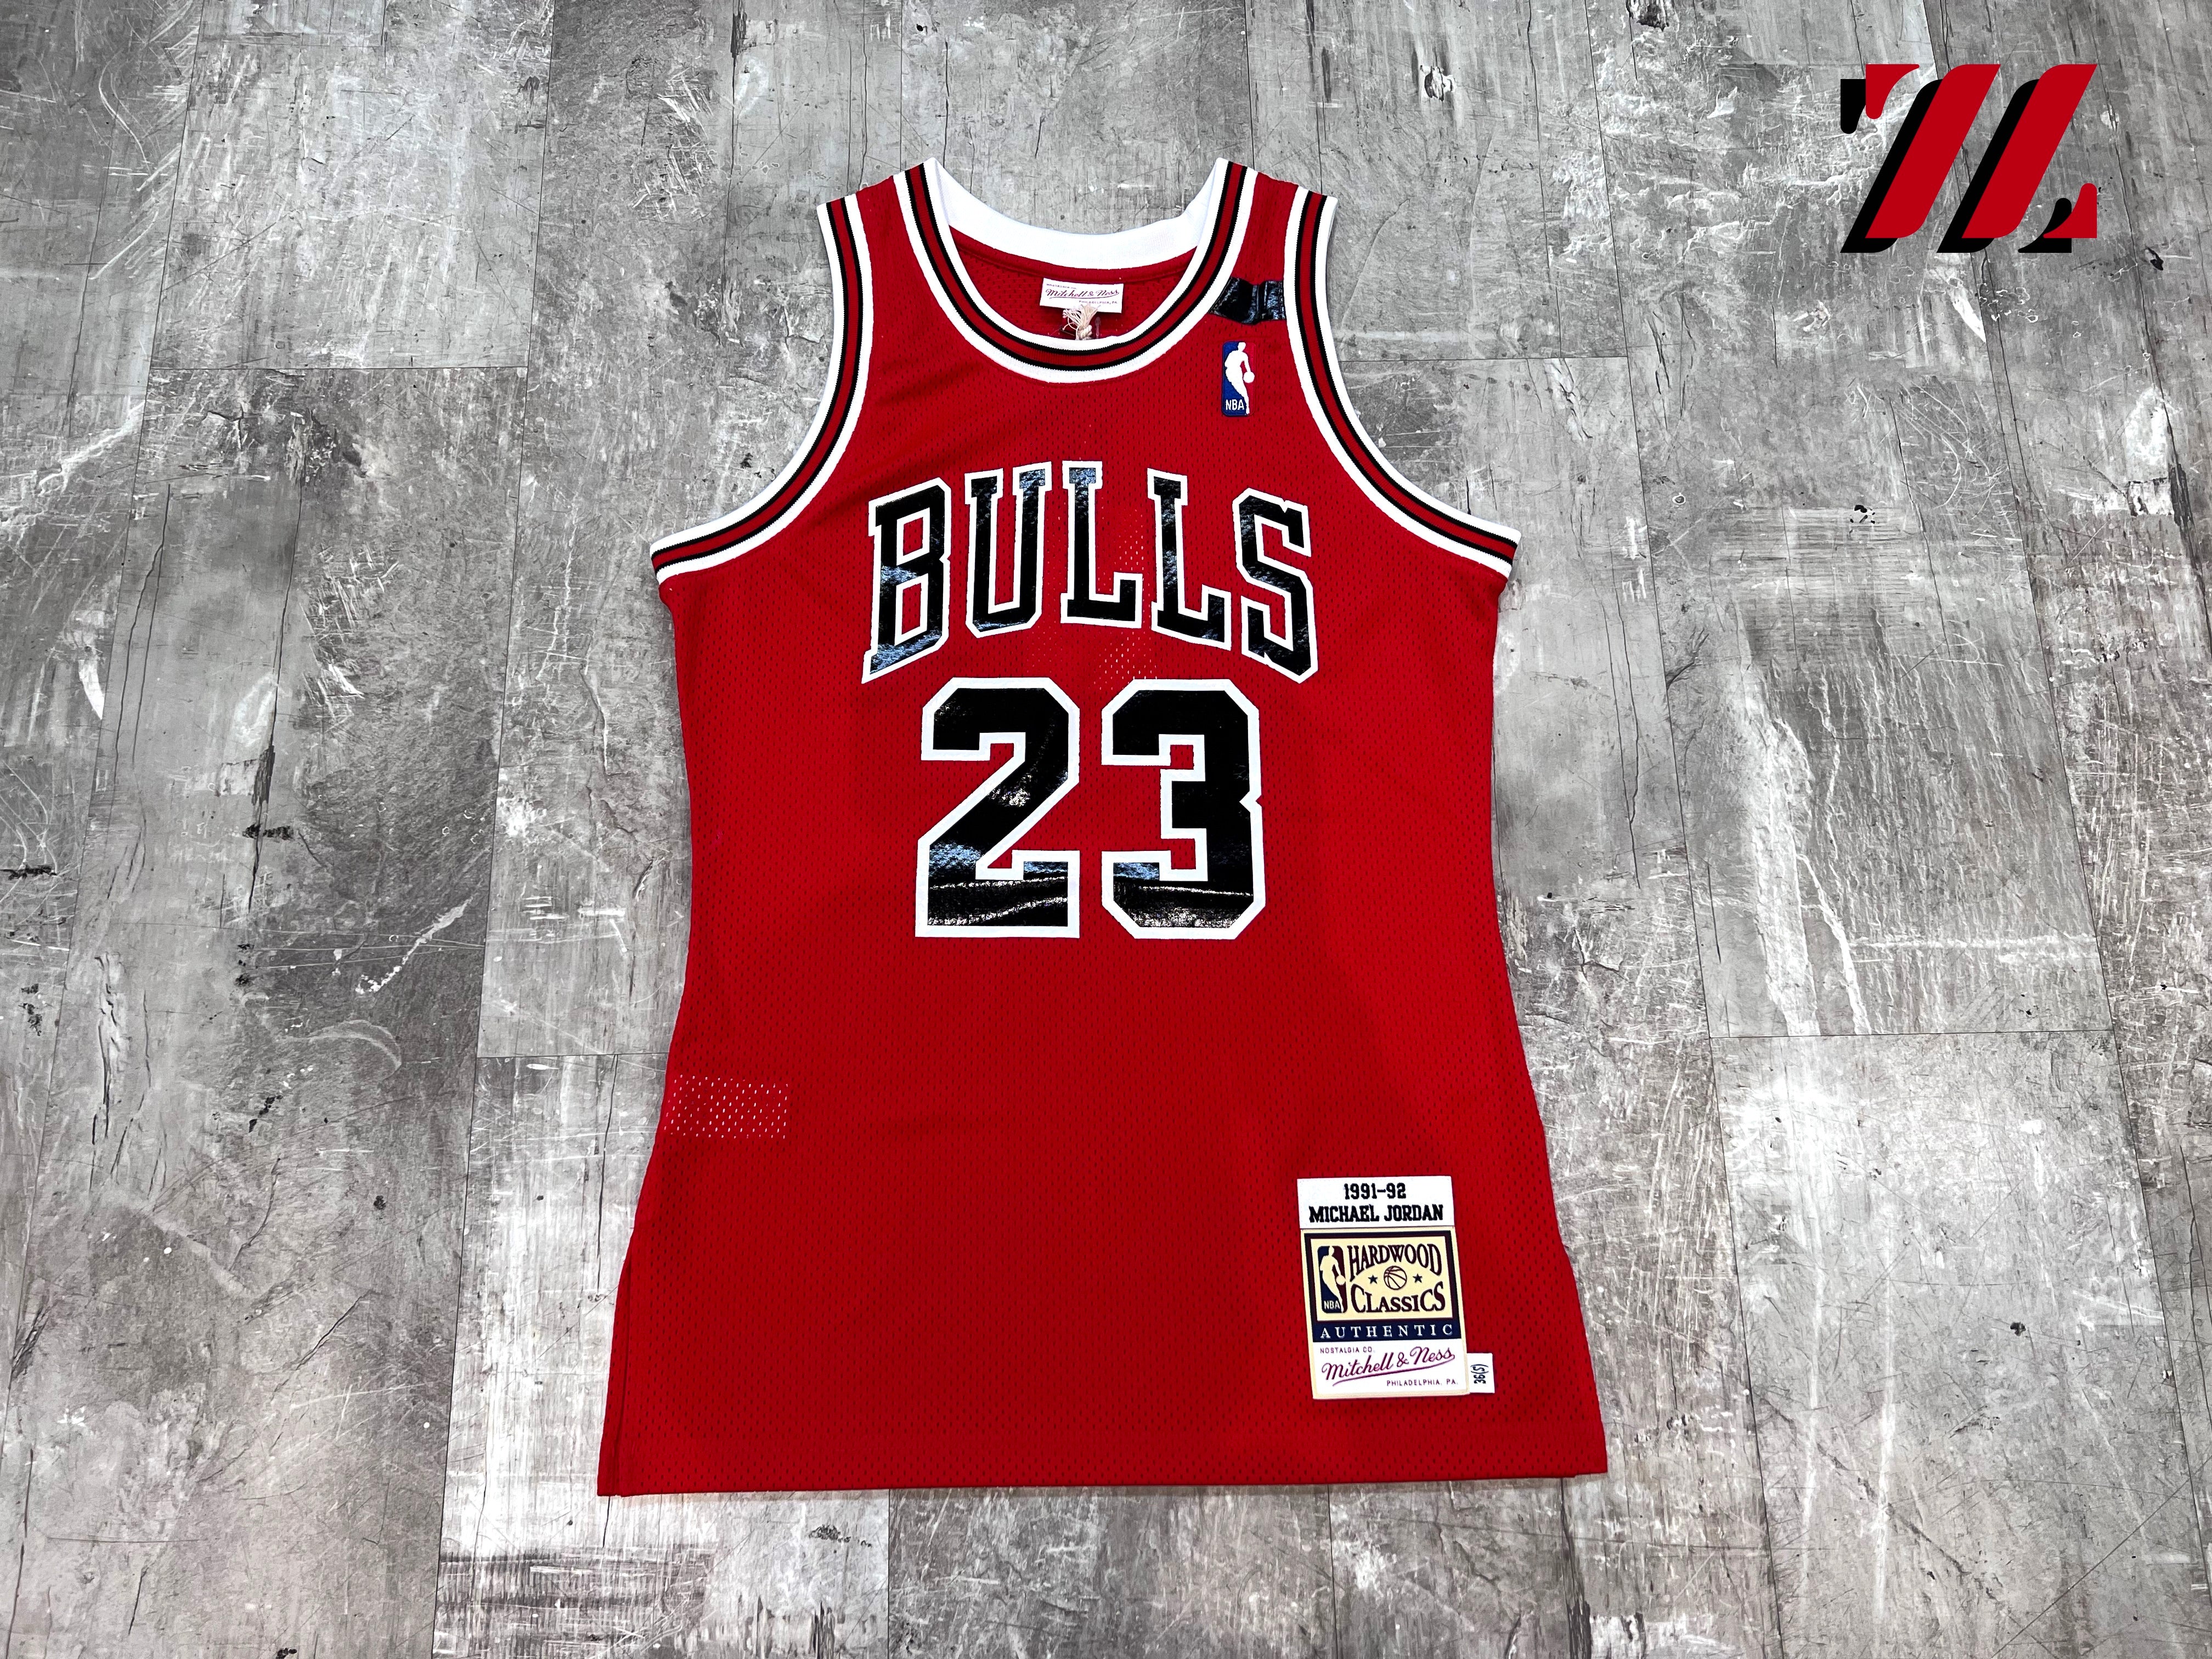 Mitchell & Ness Youth 1996 Chicago Bulls Michael Jordan #23 Black Hardwood  Classics Authentic Jersey